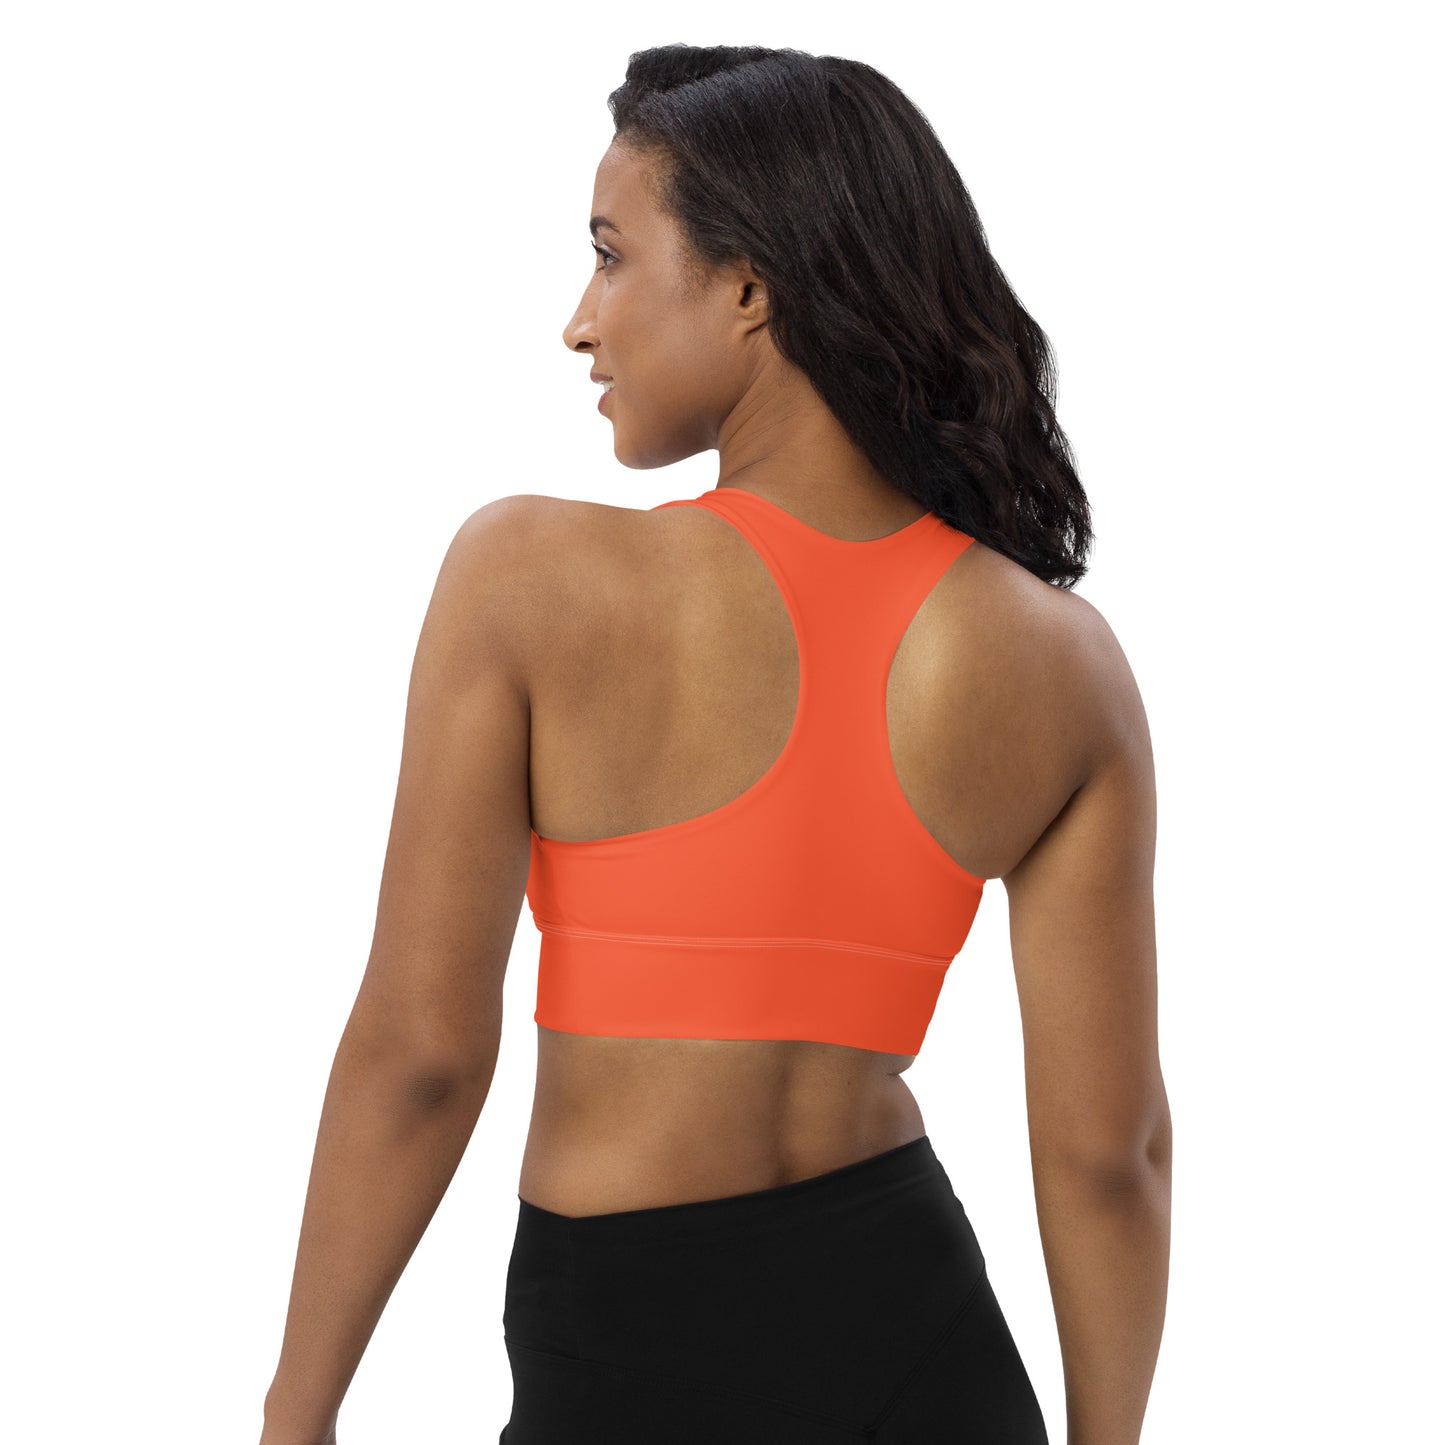  Outrageous Orange Longline sports bra by Long-line Women's High Impact Sports Bra sold by Jain Yoga